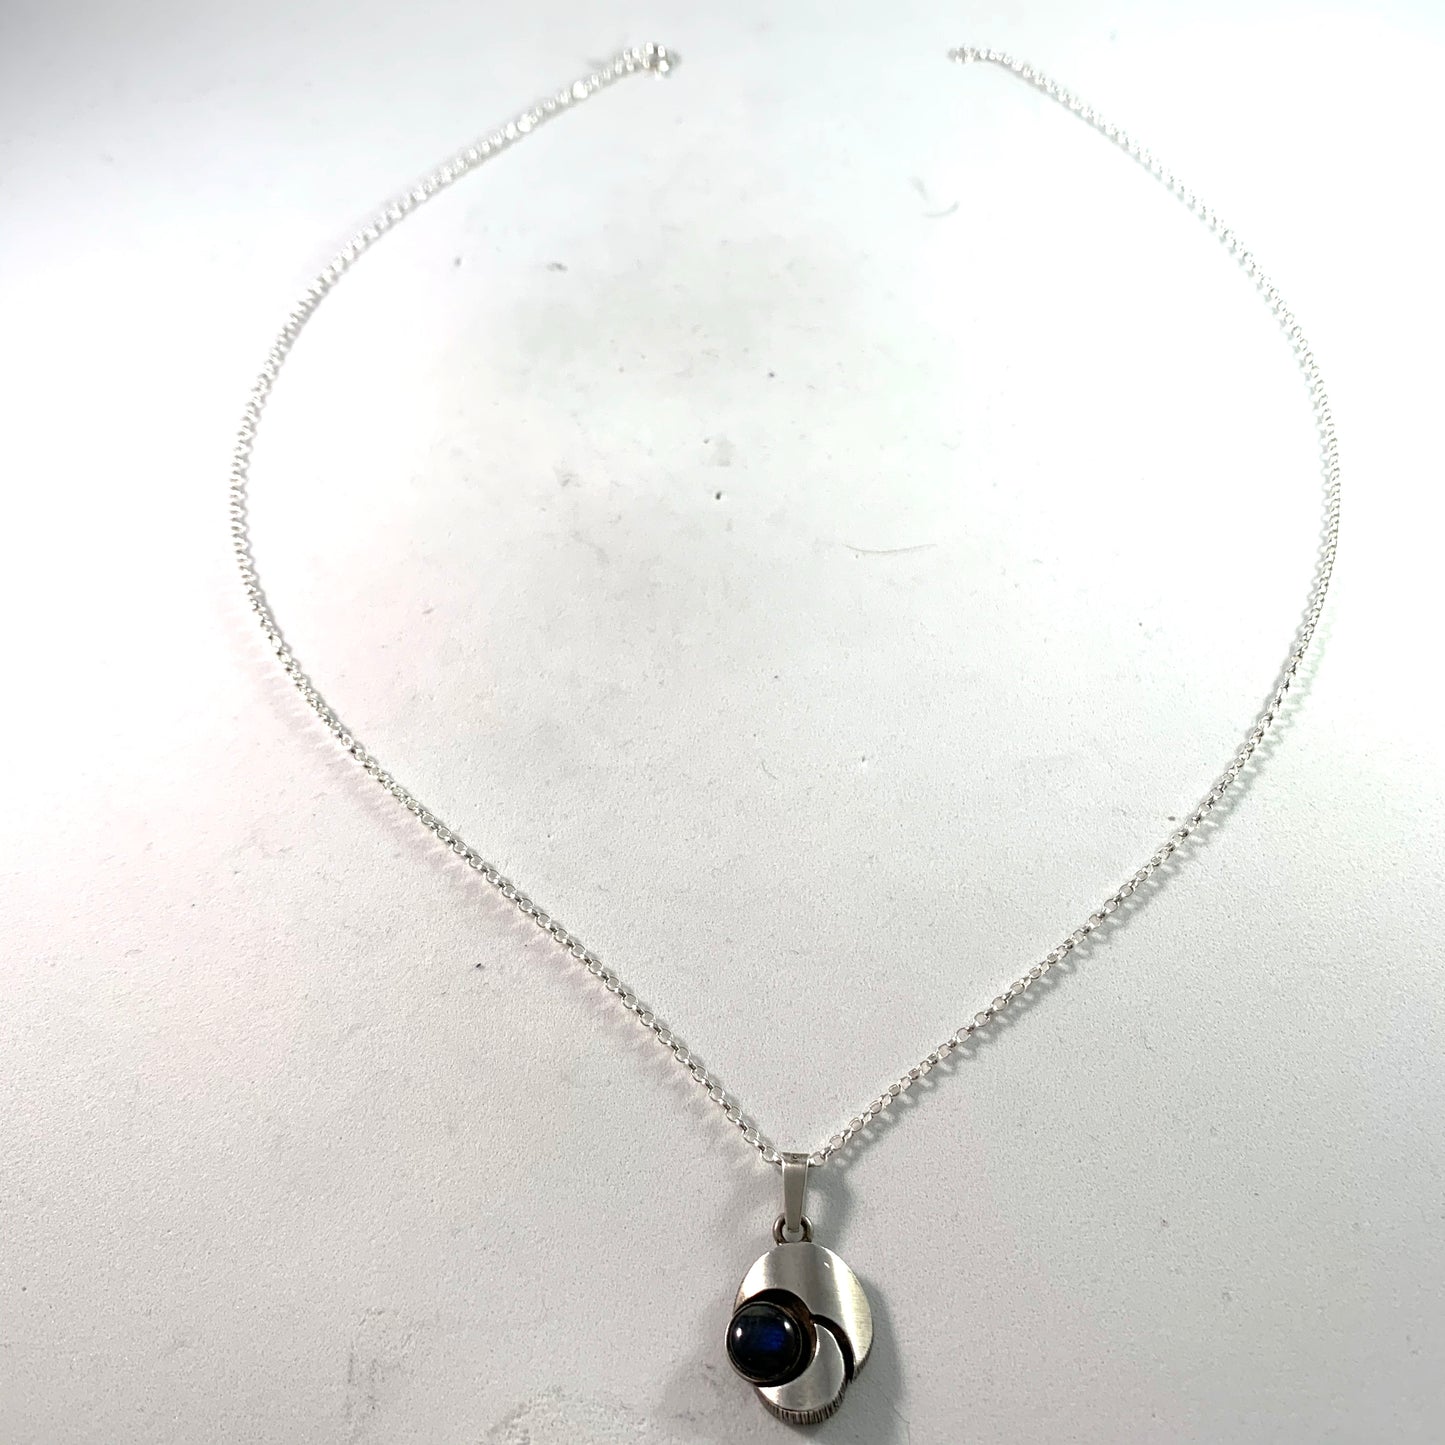 Finnfeelings, Finland Vintage Sterling Labradorite Pendant Necklace.